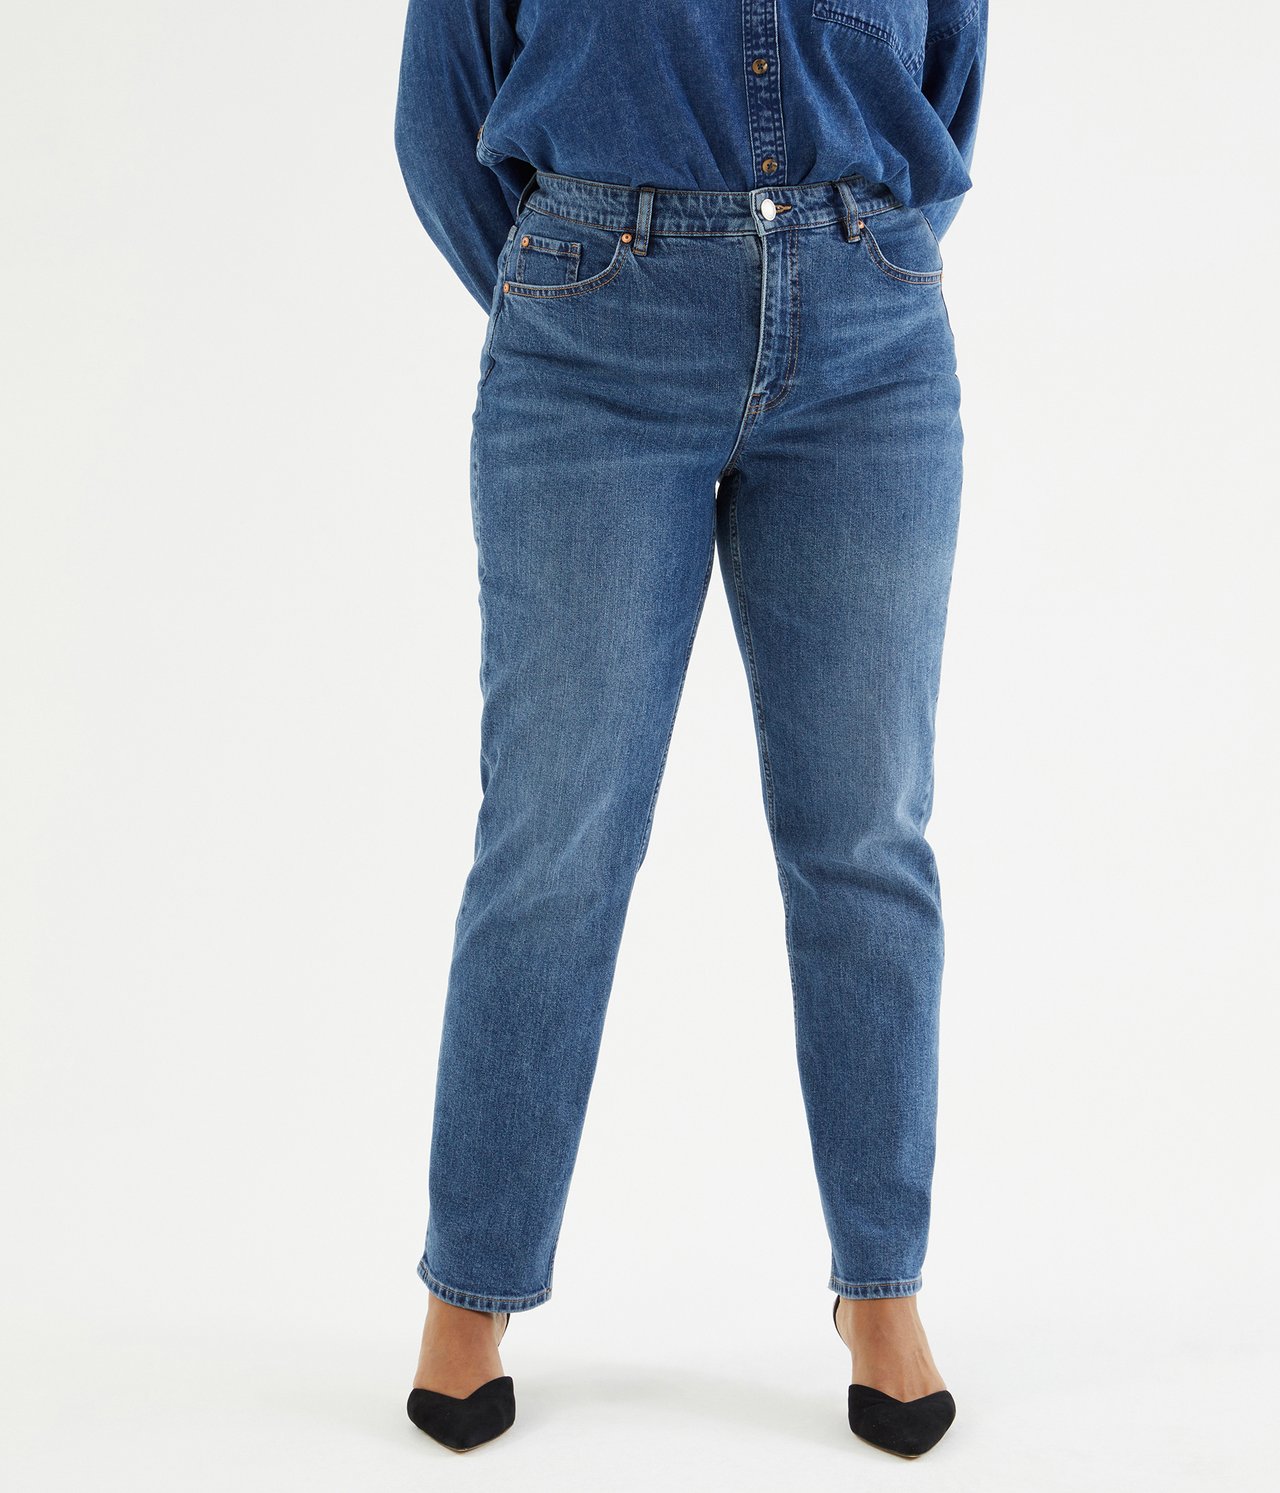 Jeans high waist tapered - Denim - 4